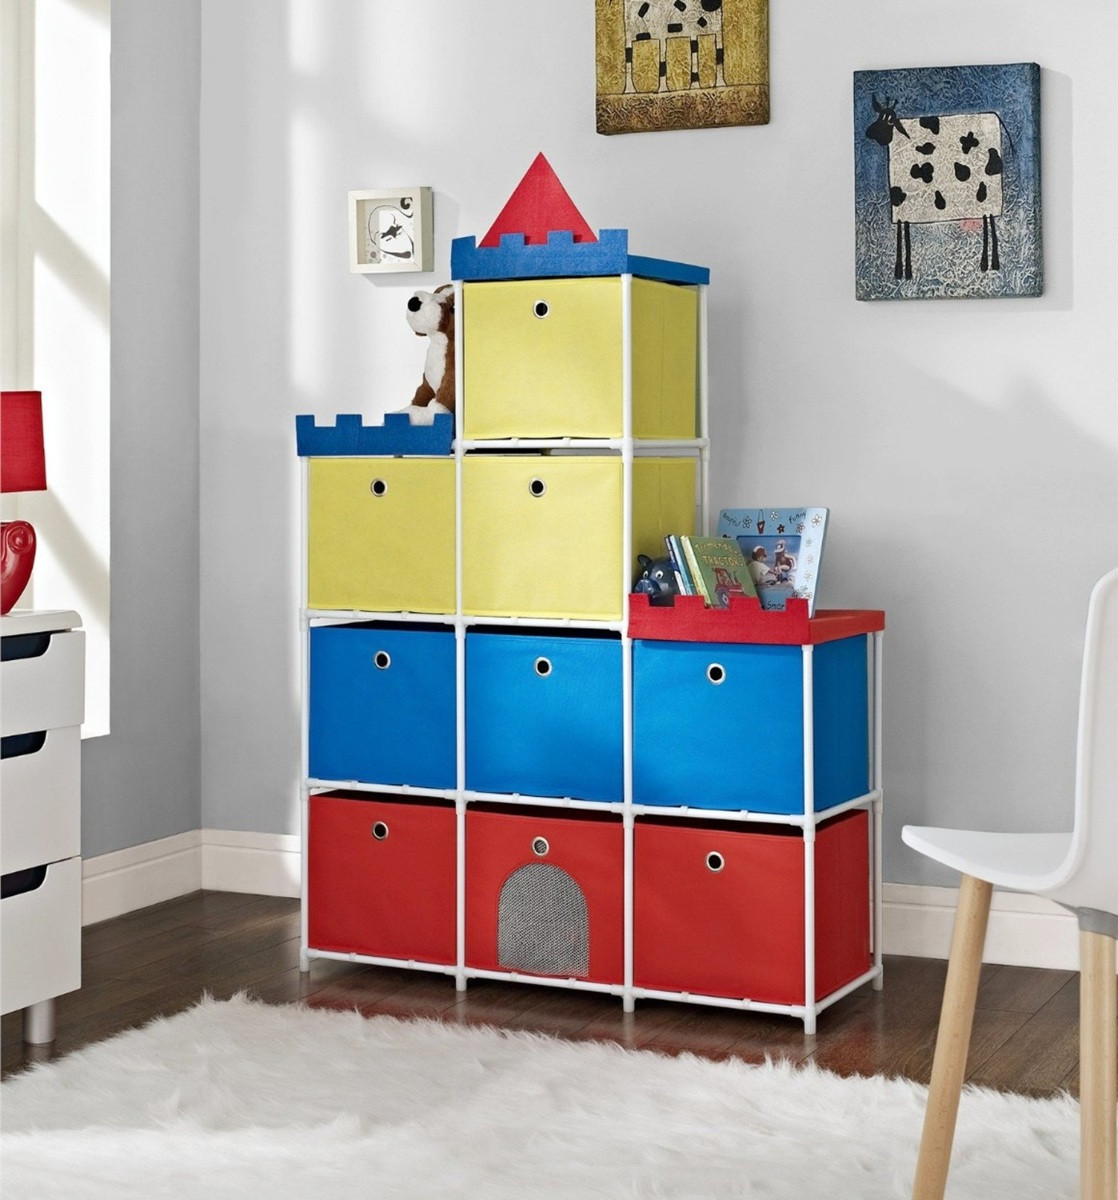 Childrens Storage Furniture
 Altra Furniture 9 Bin Kids Storage Unit w Castle Theme